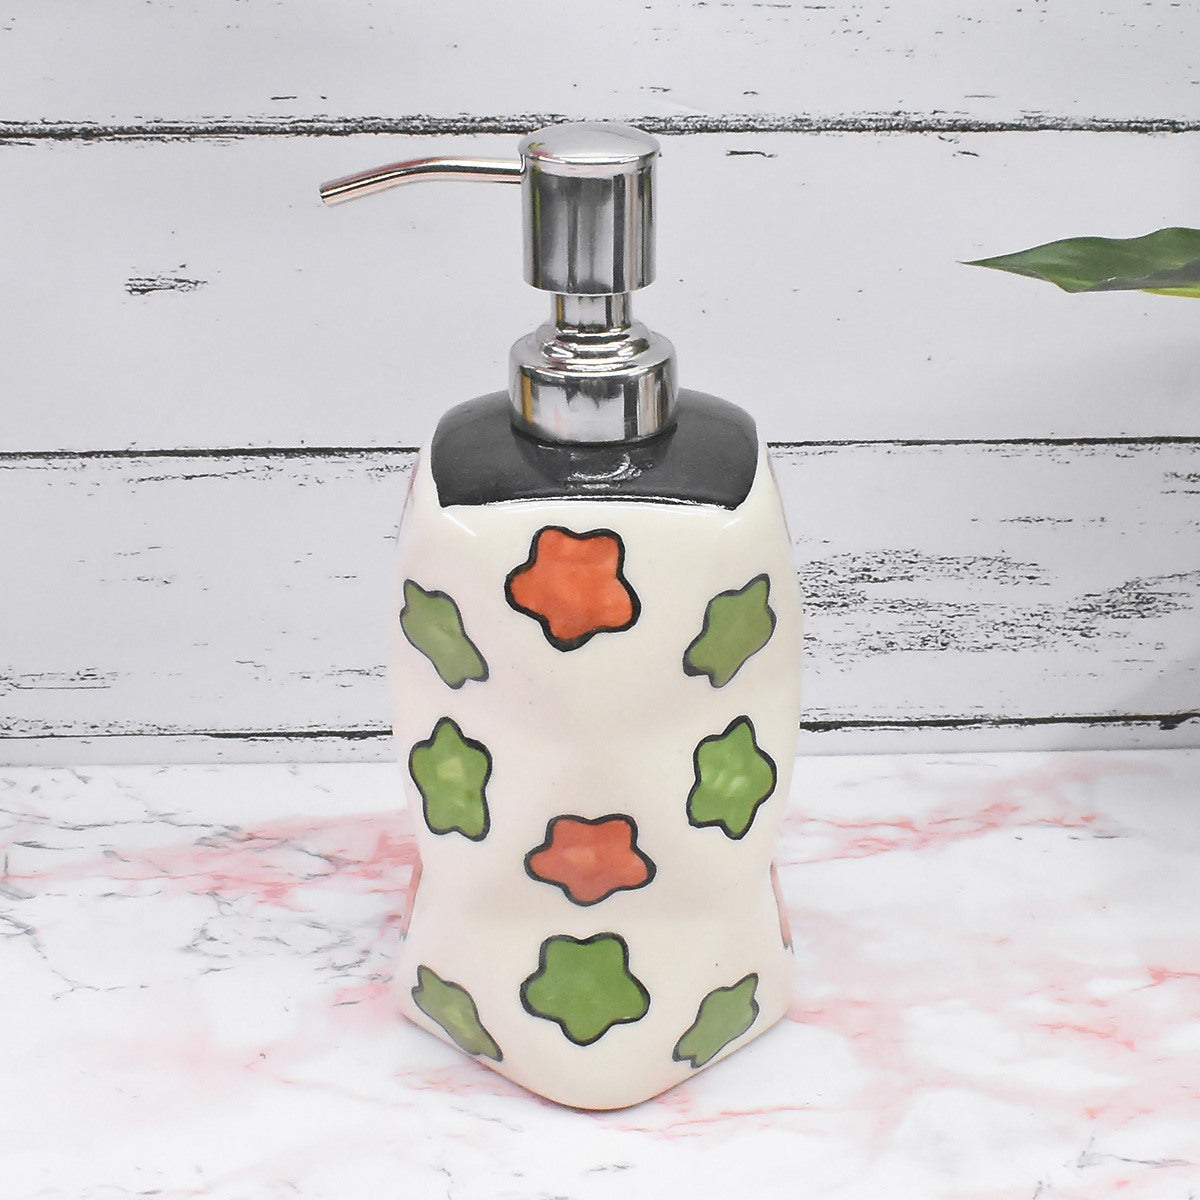 Ceramic Soap Dispenser handwash Pump for Bathroom, Set of 1, Multicolor (9687)